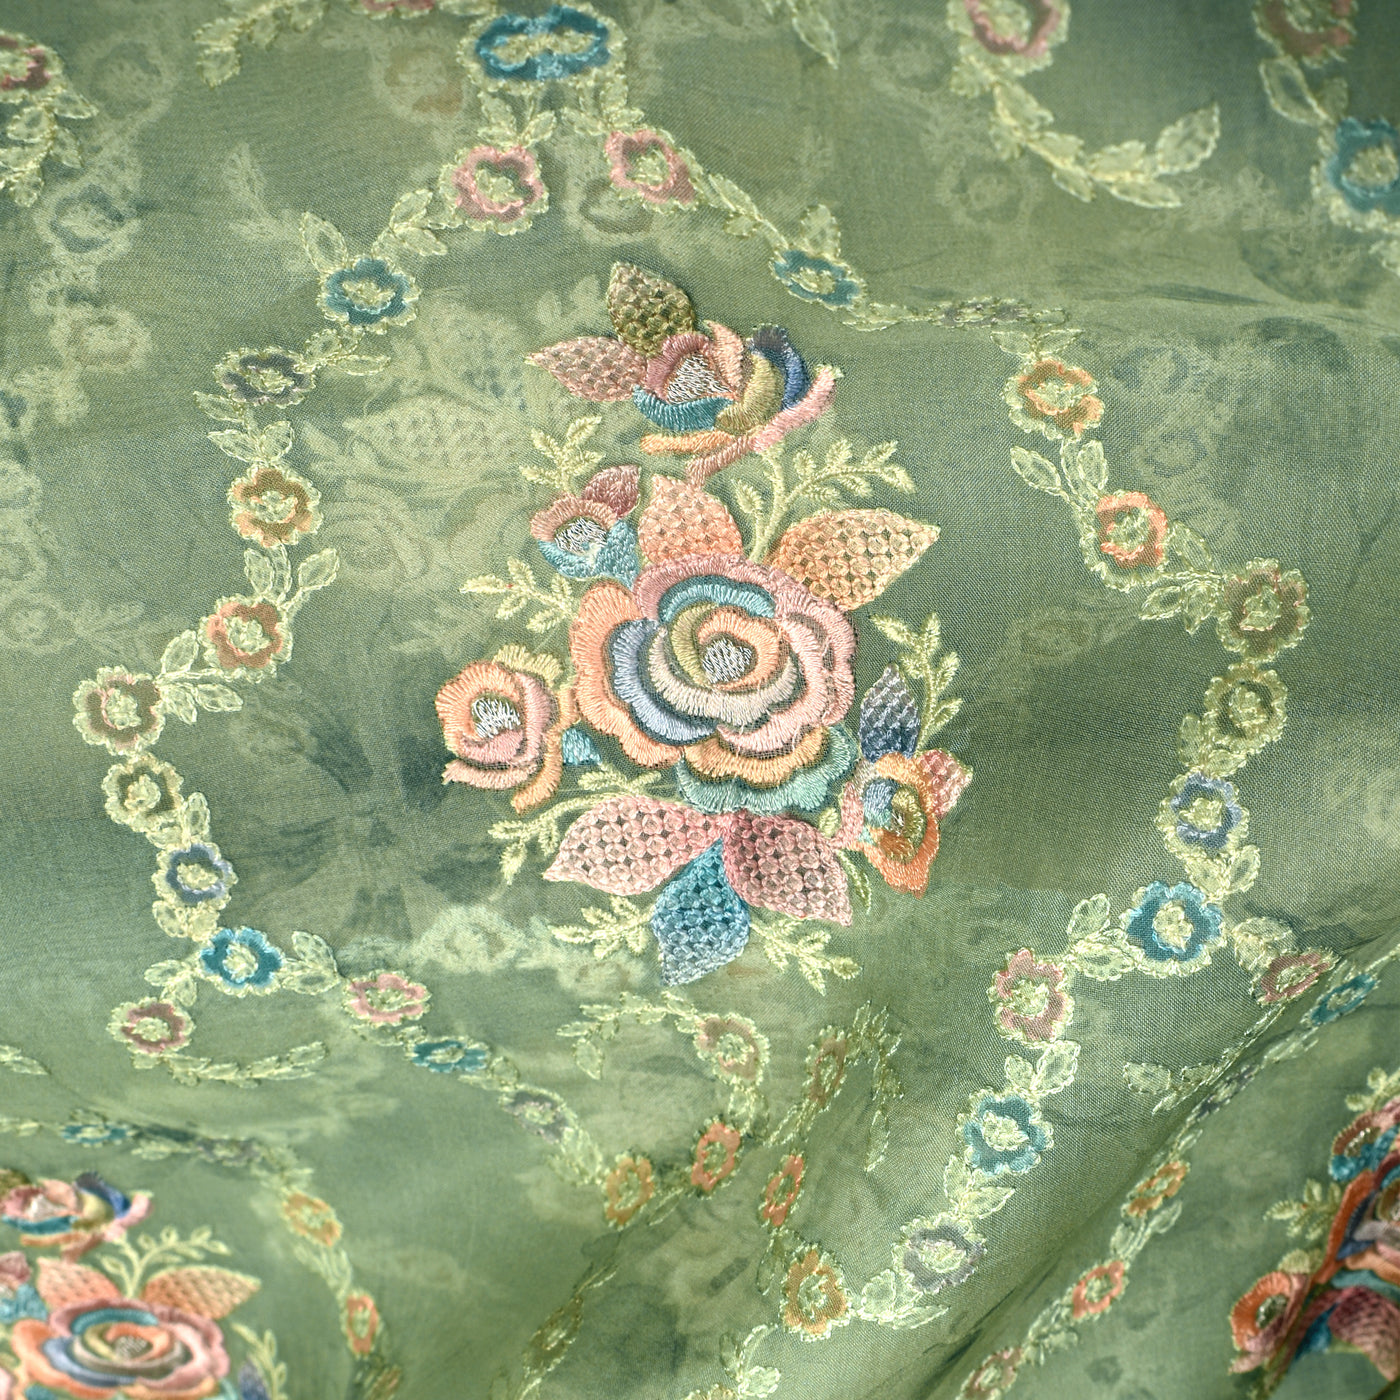 Organza Silk Fabrics